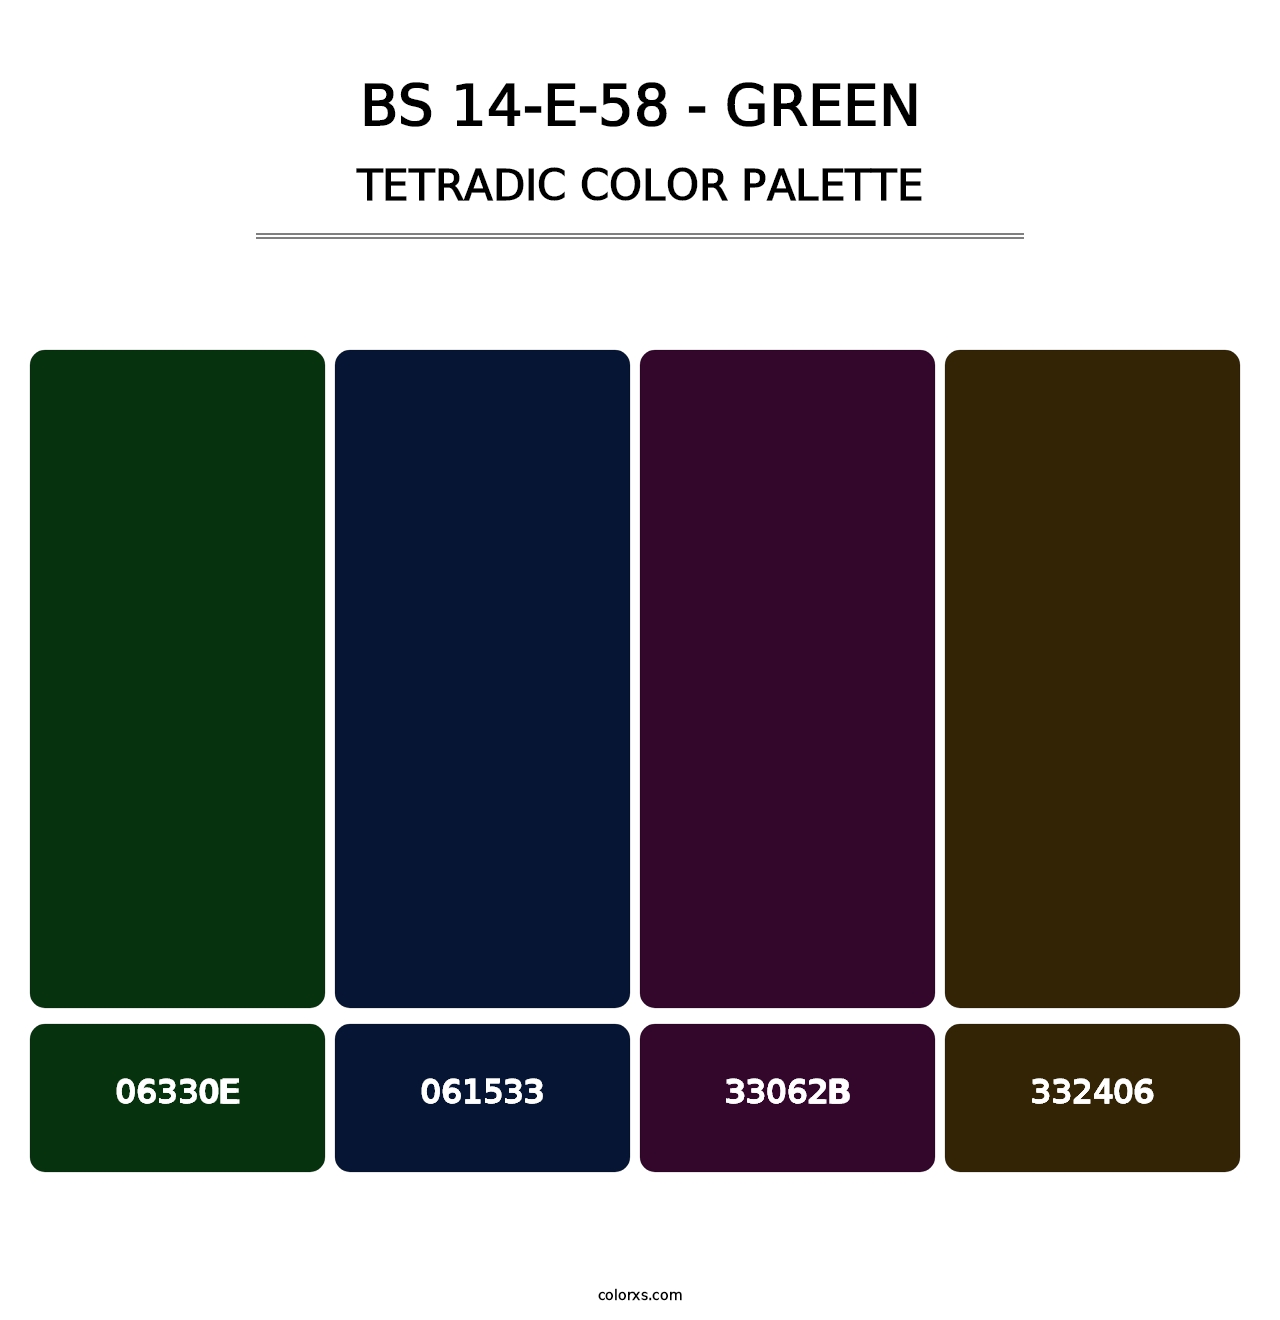 BS 14-E-58 - Green - Tetradic Color Palette